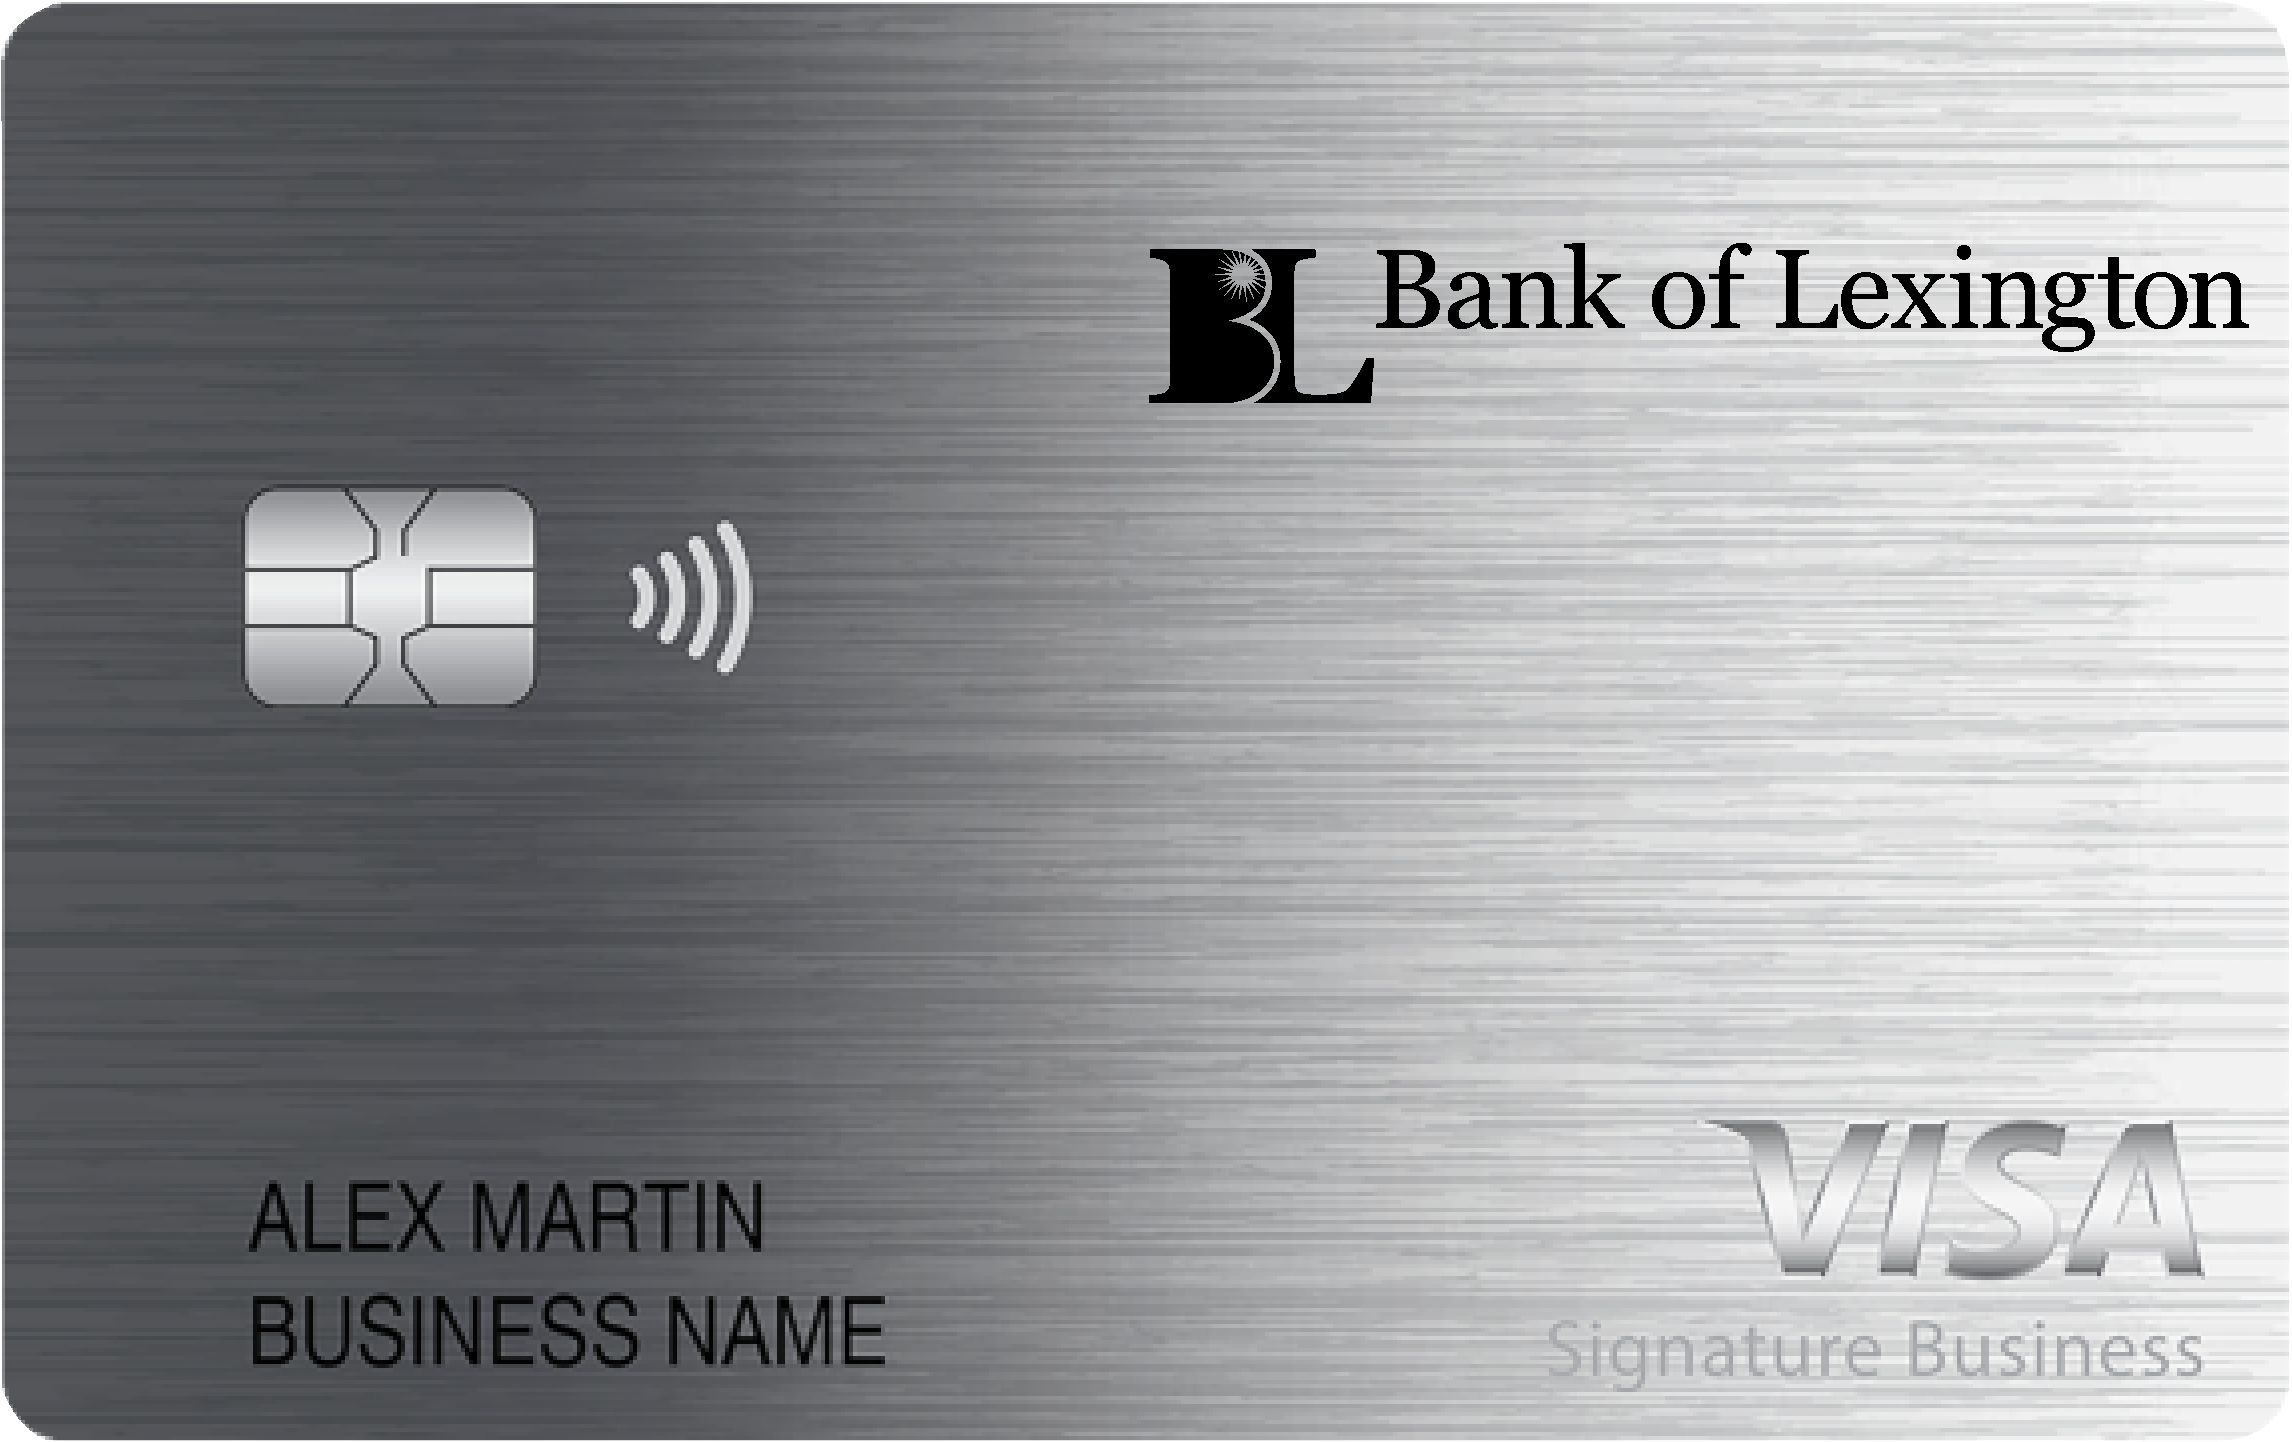 Bank of Lexington Smart Business Rewards Card